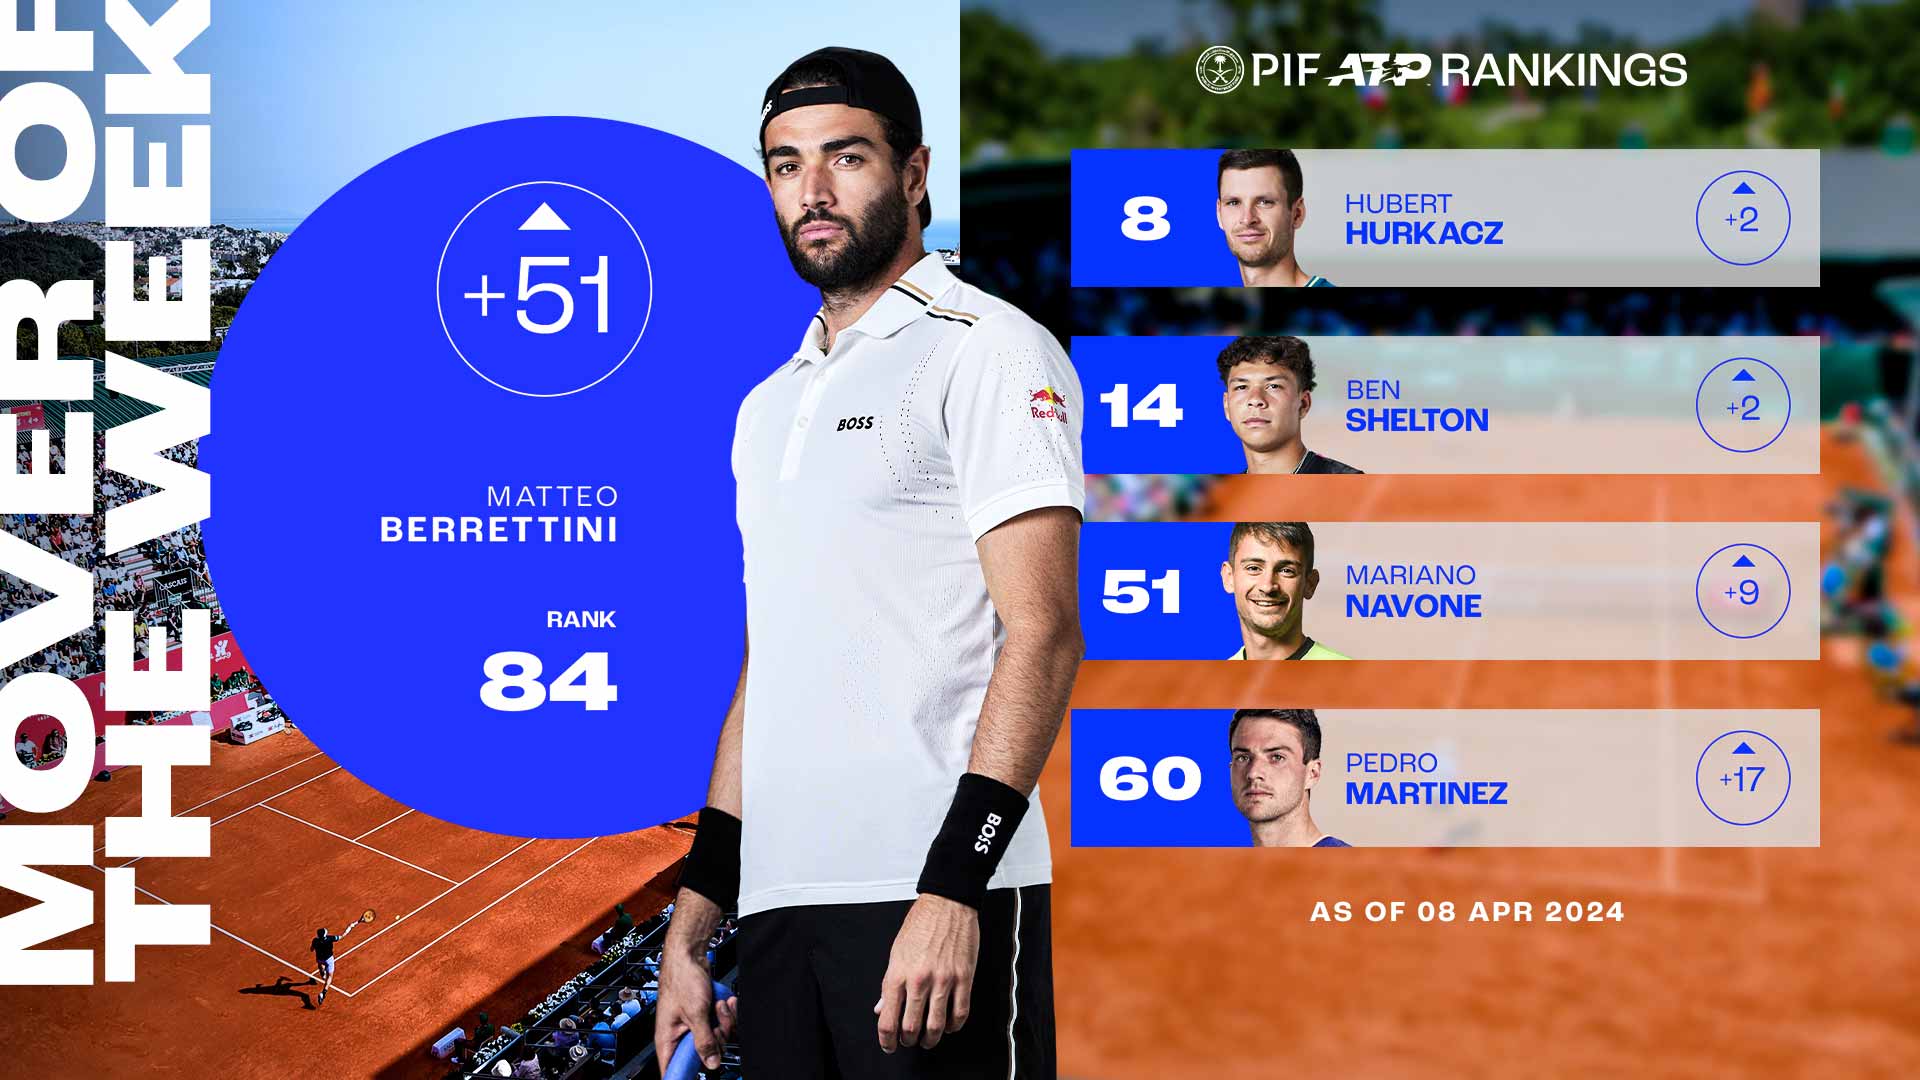 Matteo Berrettini ha regresado al Top 100 del PIF ATP Rankings tras levantar el título en Marrakech.